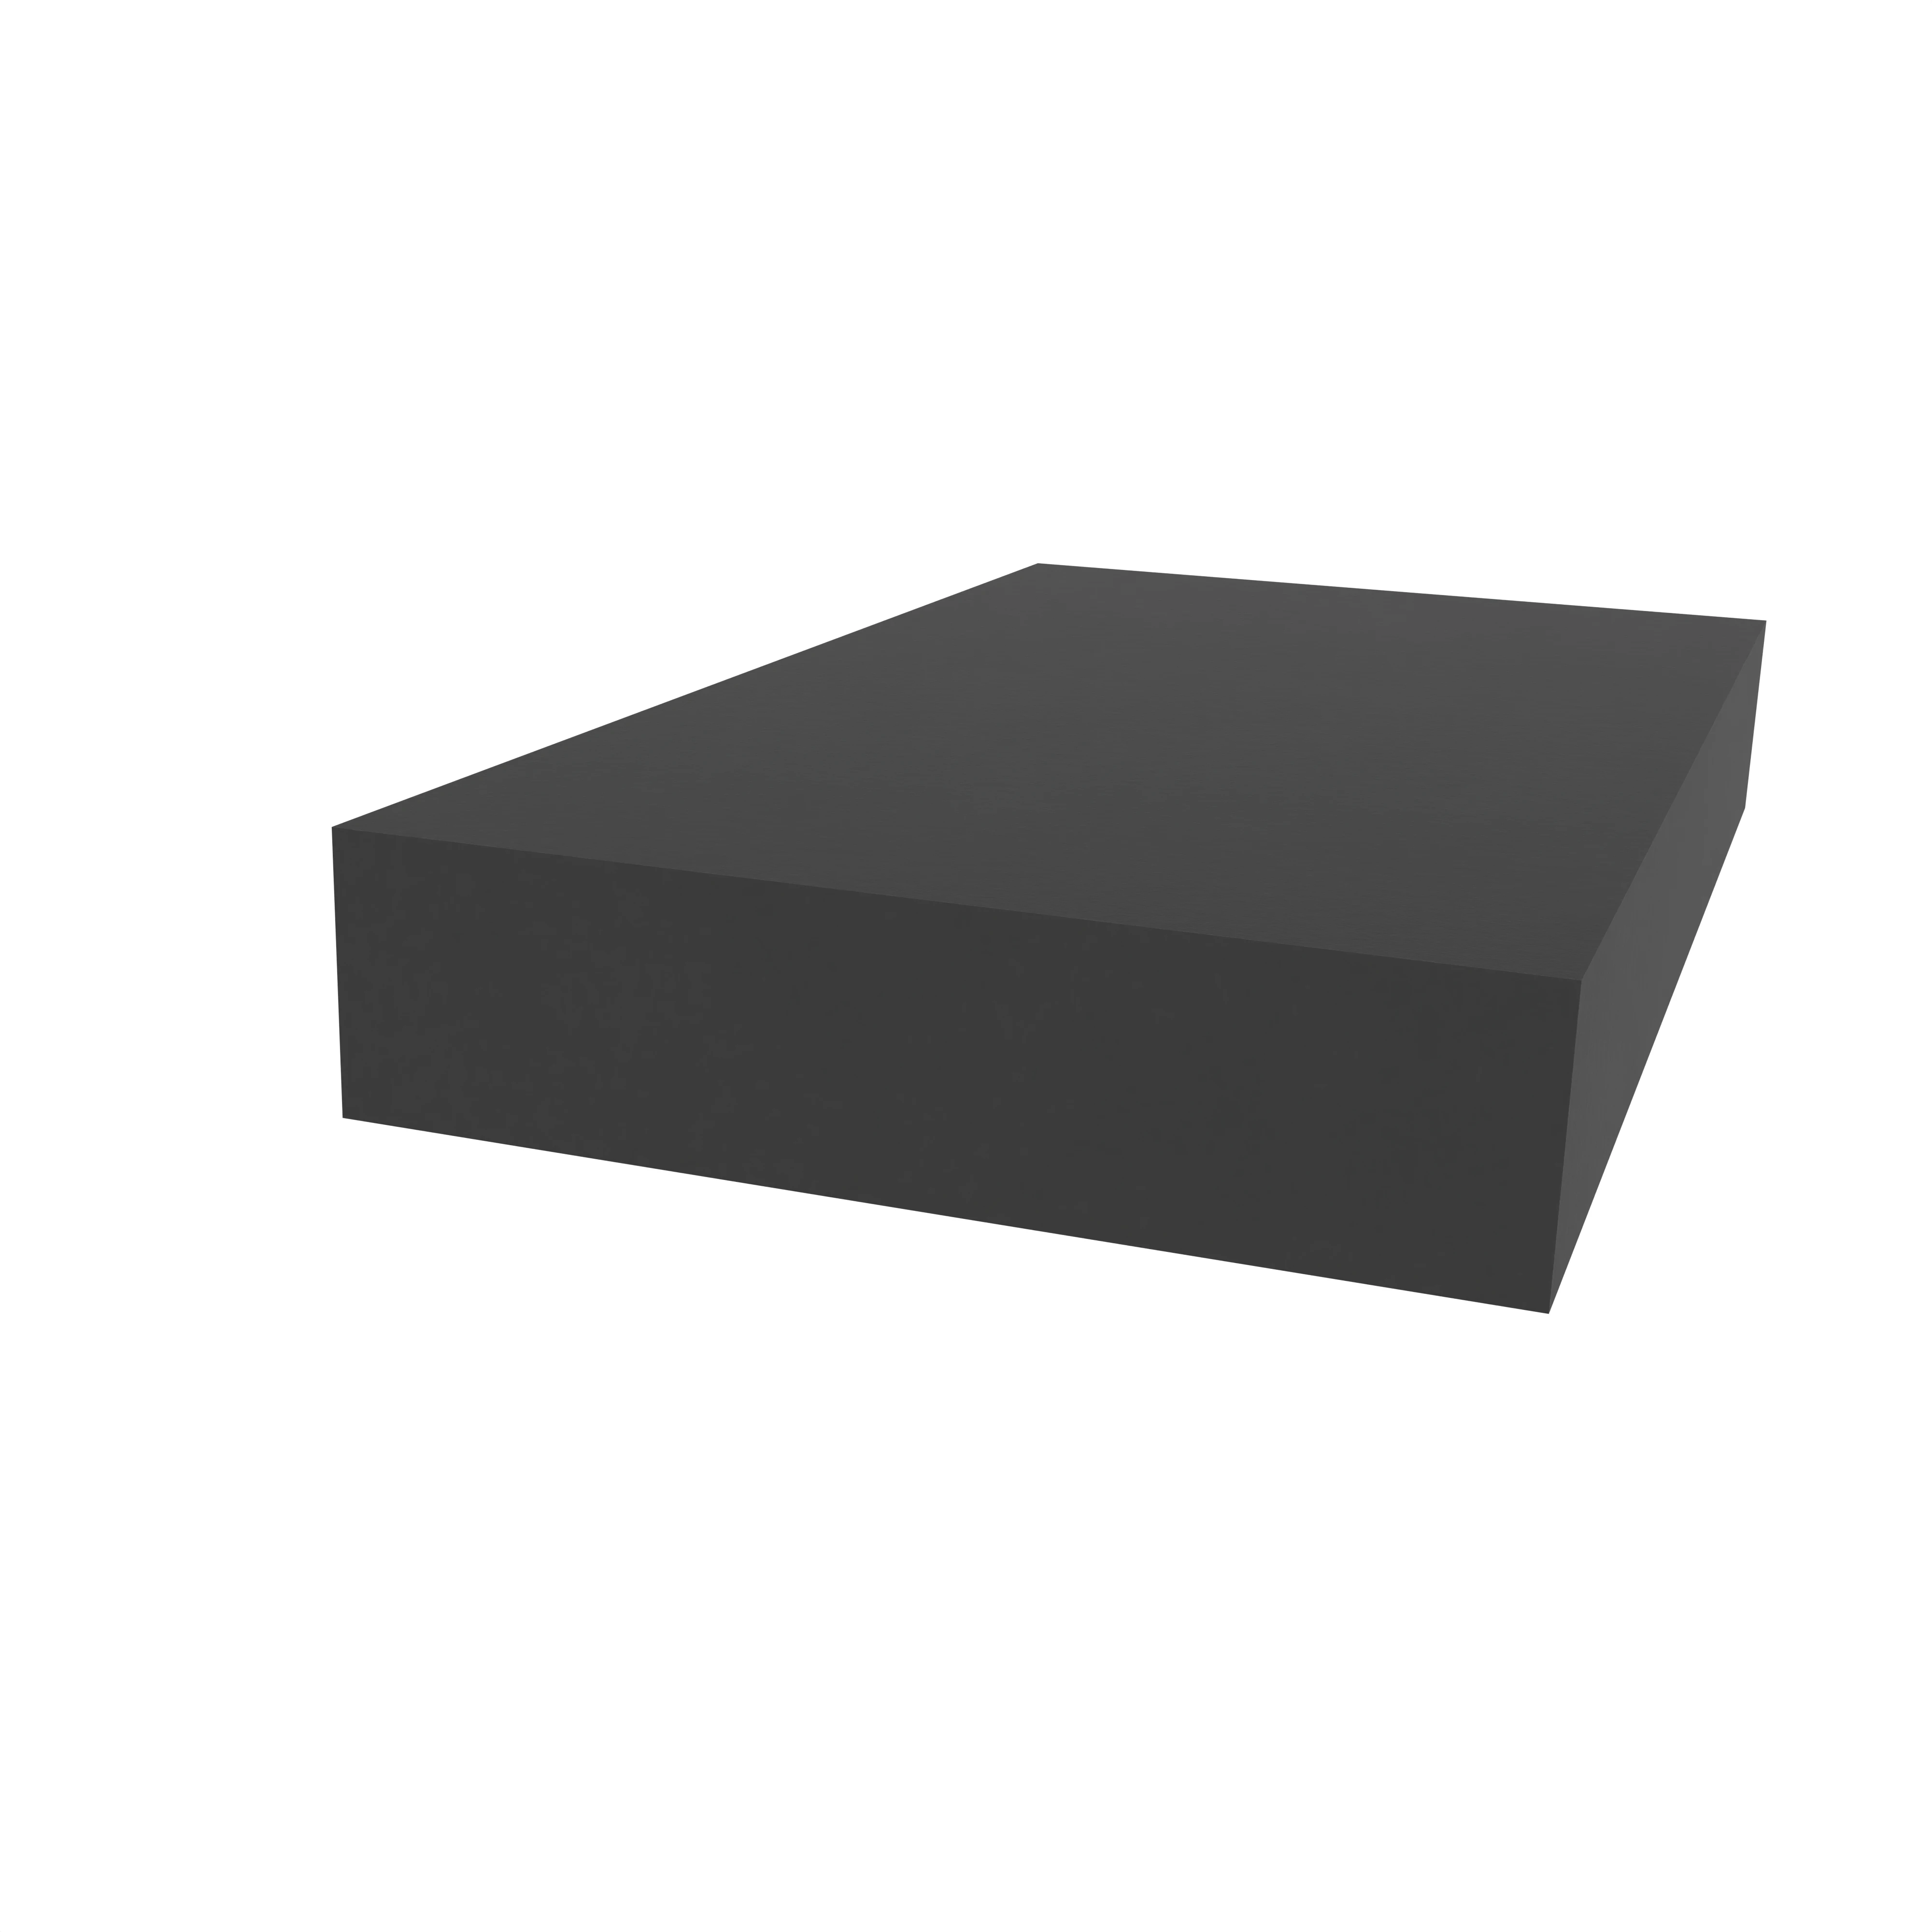 Moosgummidichtung vierkant | 5 mm Höhe | Farbe: schwarz